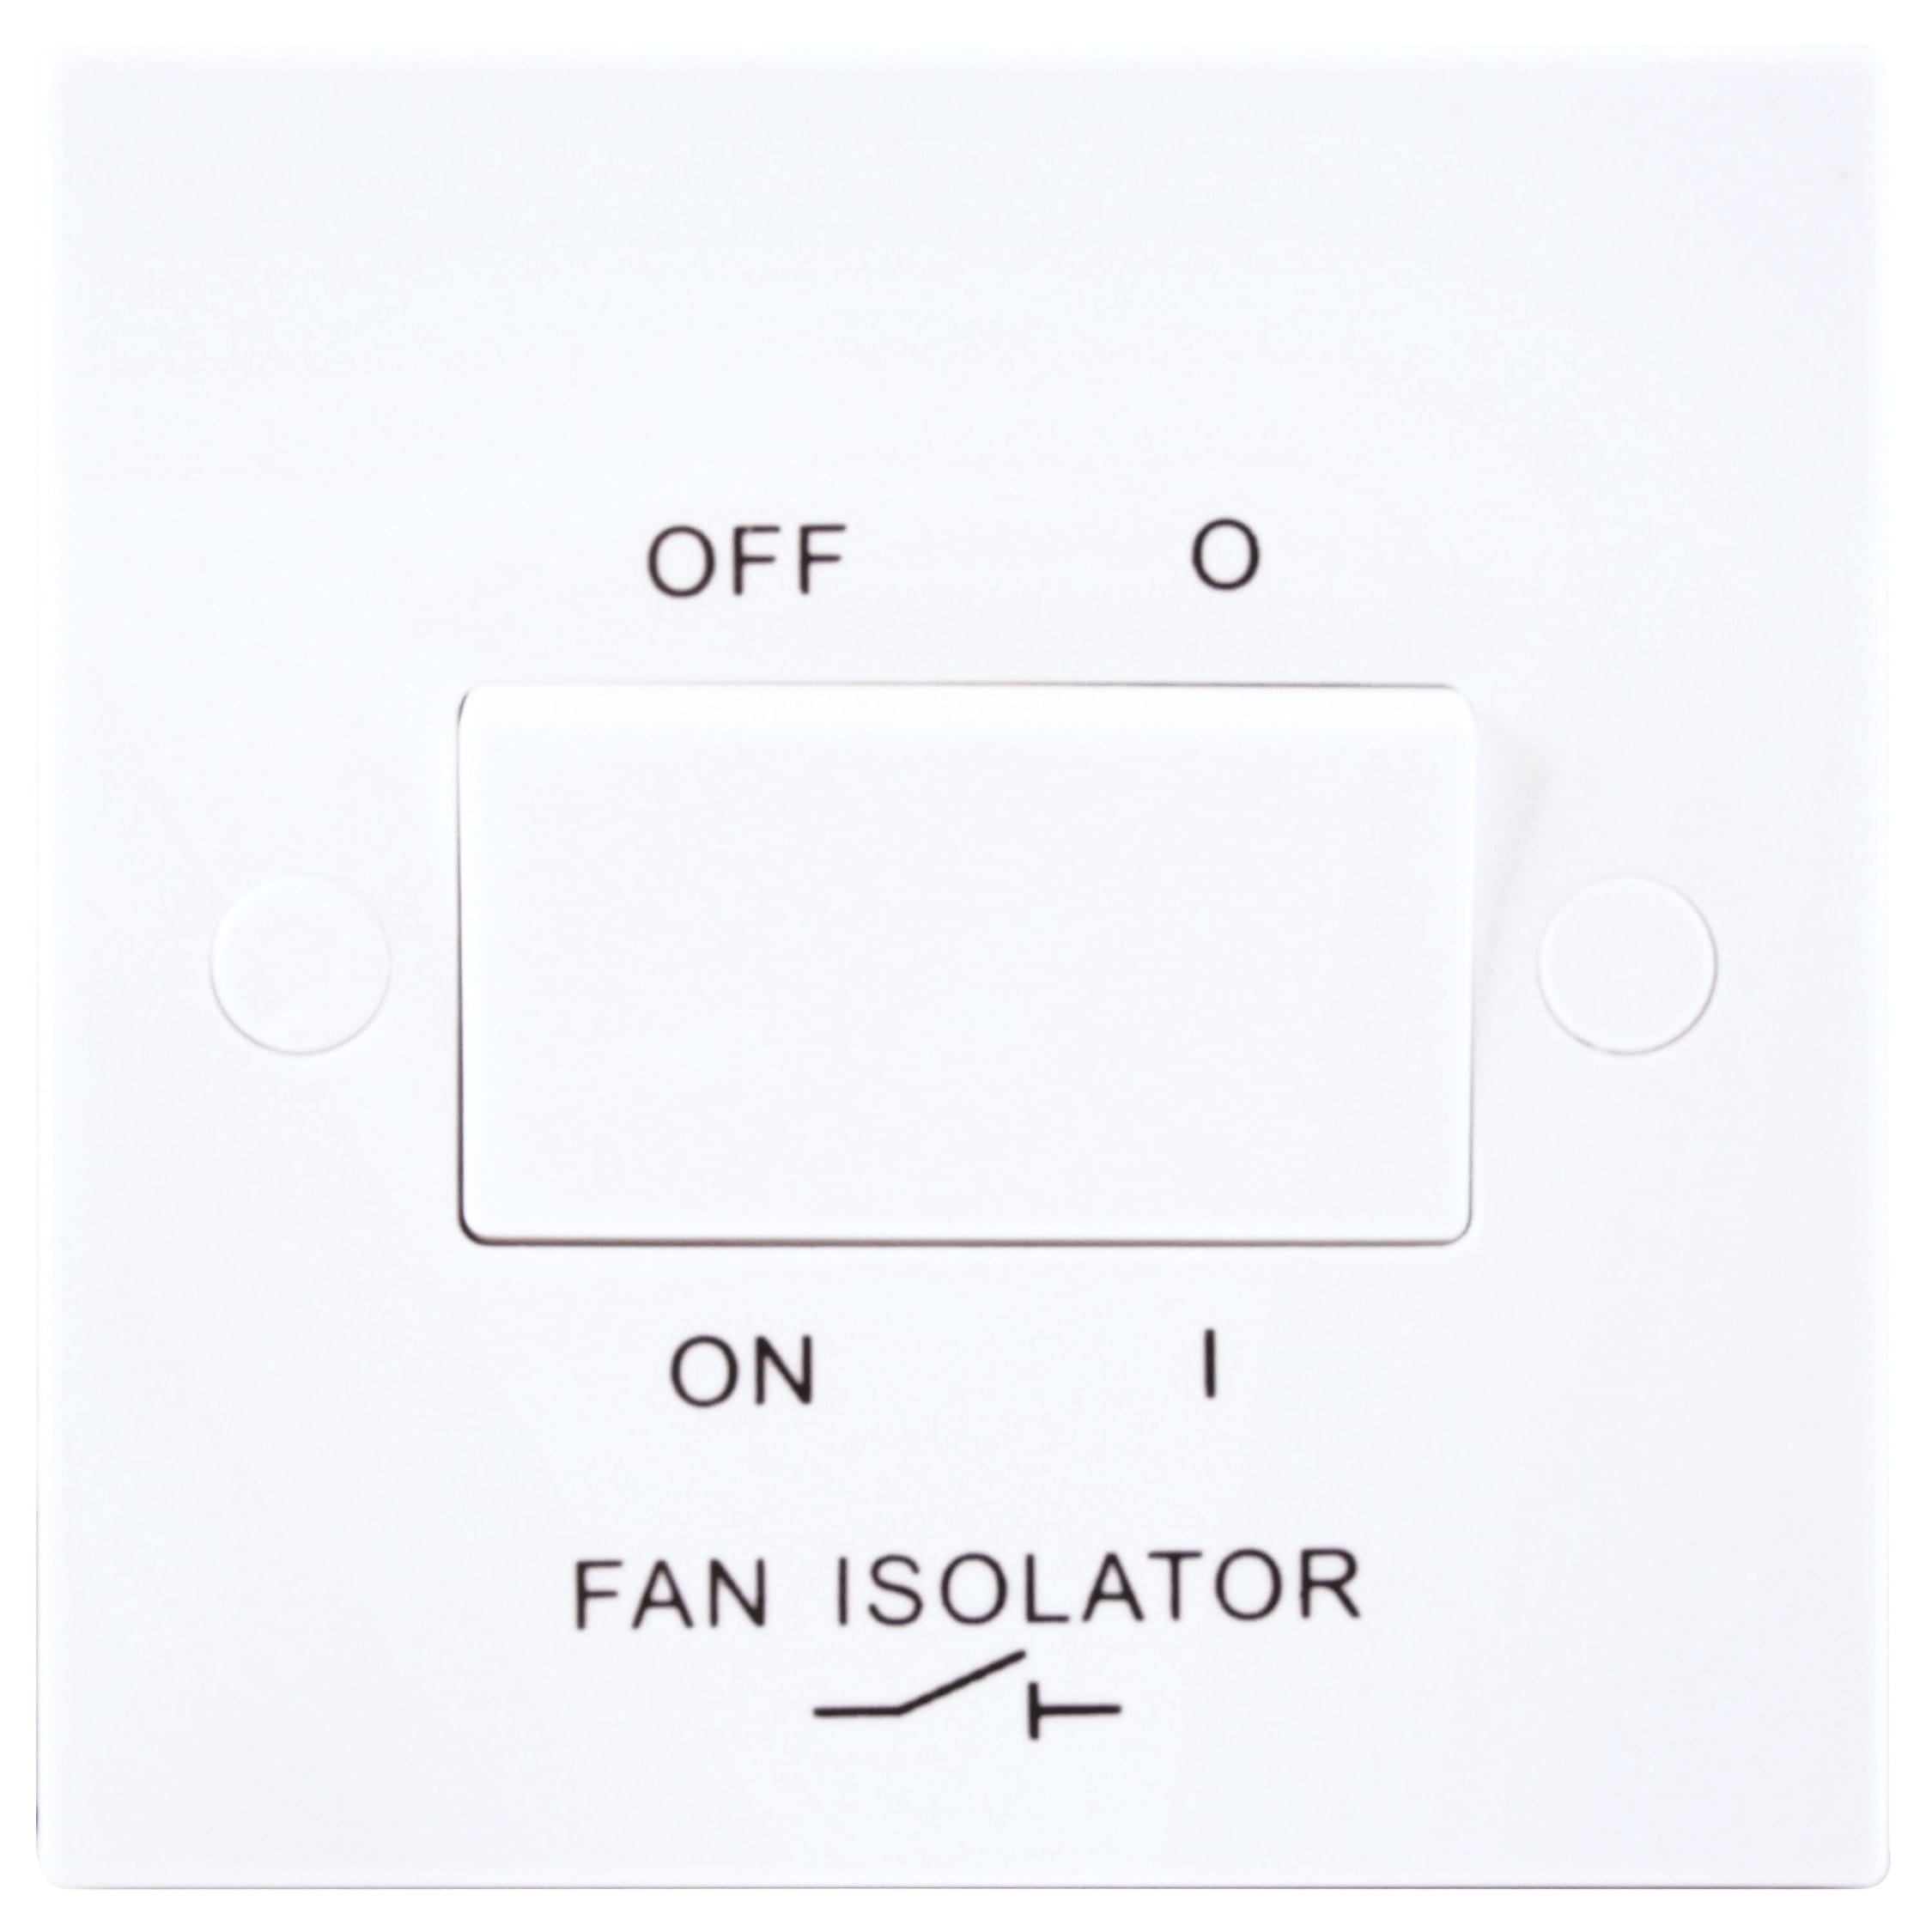 15yr Garantie Schraubenlose 10a 3 polig Fan Isolator Switch-poliert Messing ip20